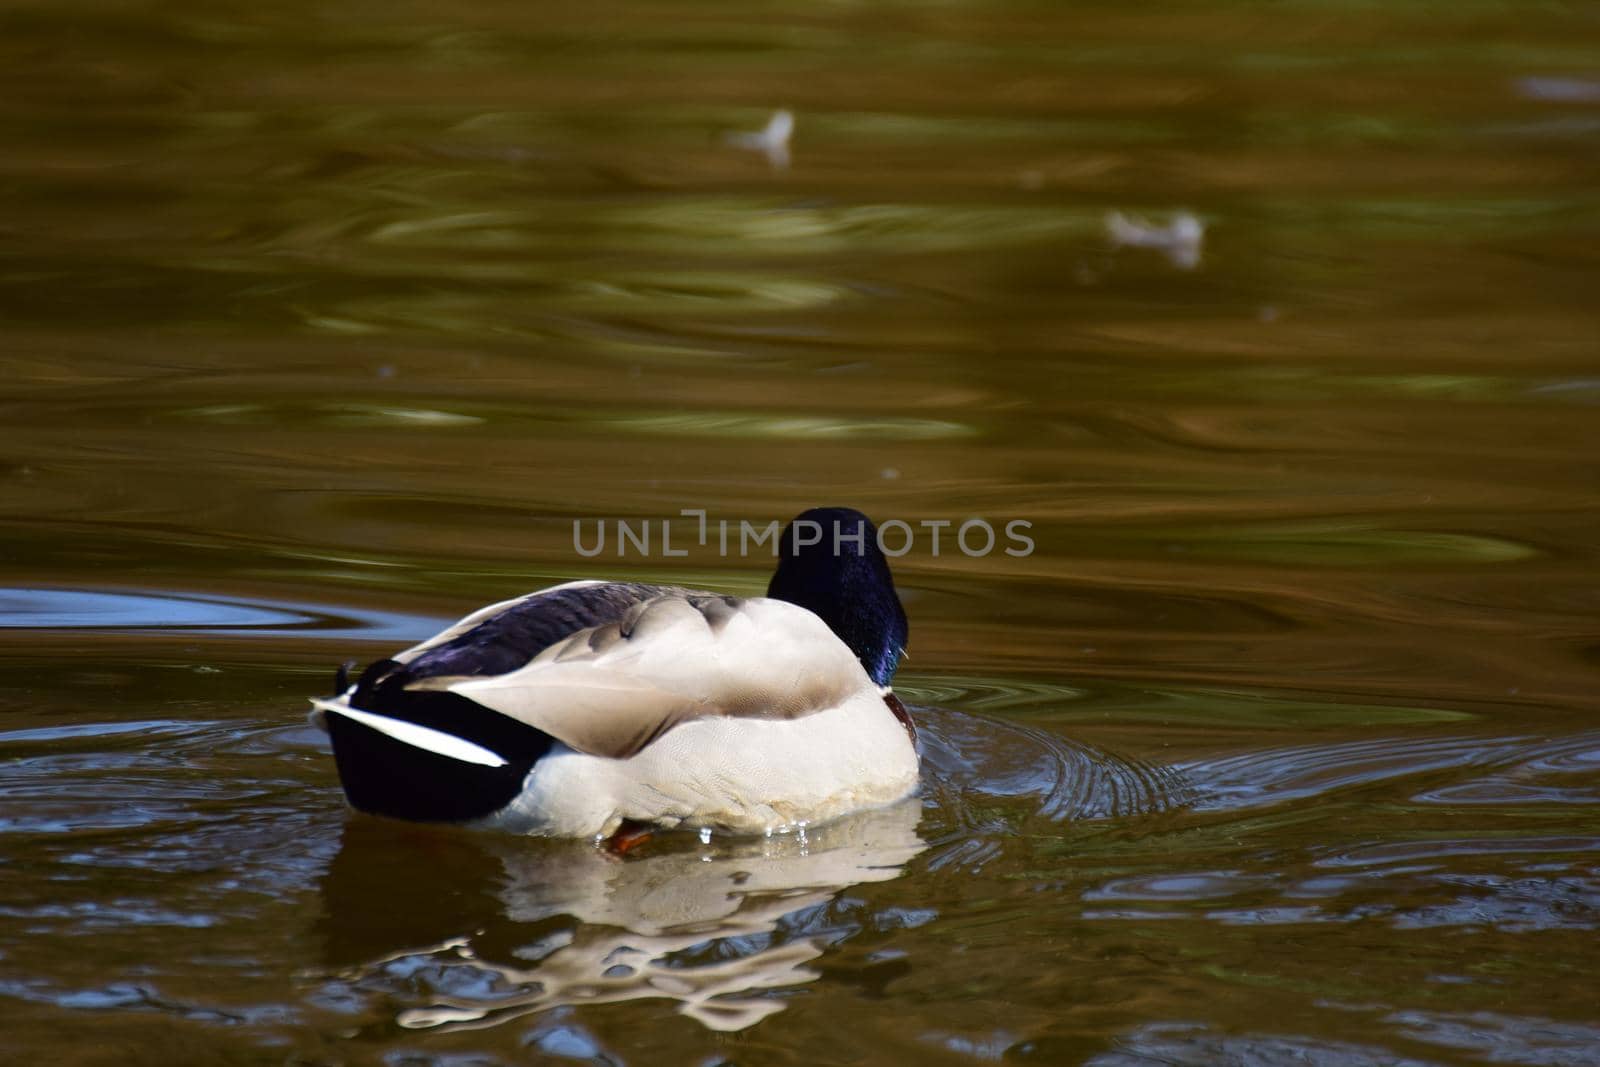 A male mallard duck is swimming on a lake